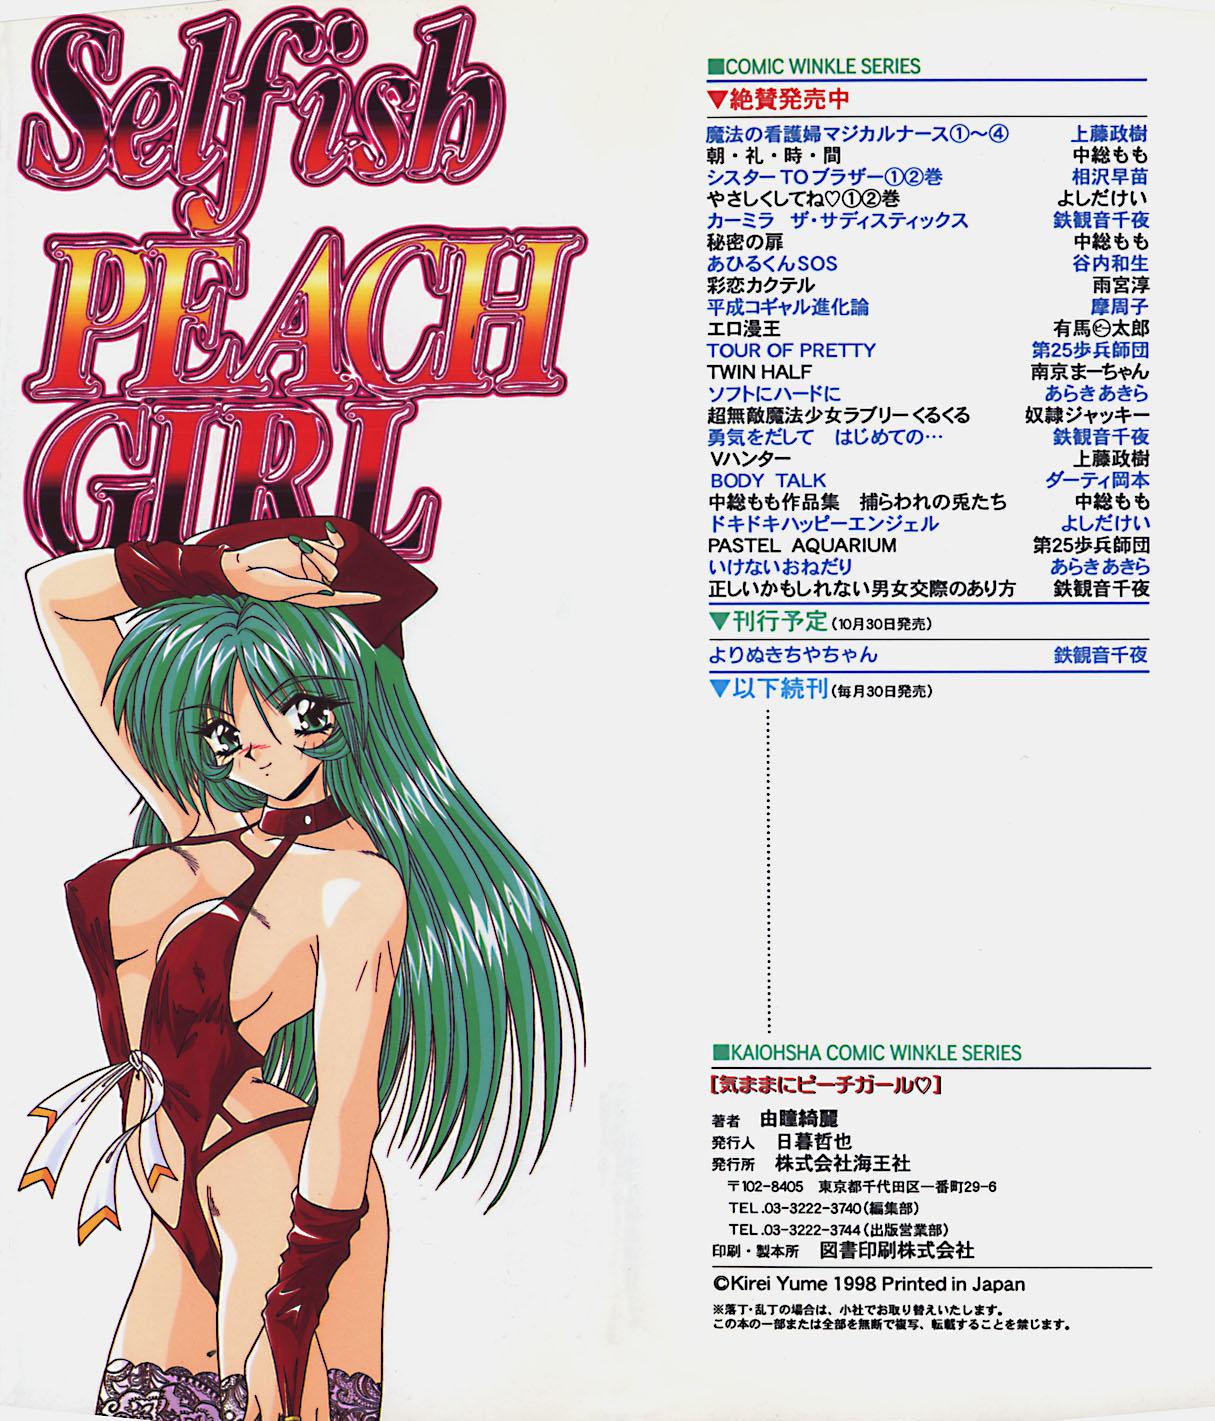 Masseur Kimama ni Peach Girl - Selfish Peach Girl Gay Bukkakeboy - Page 3